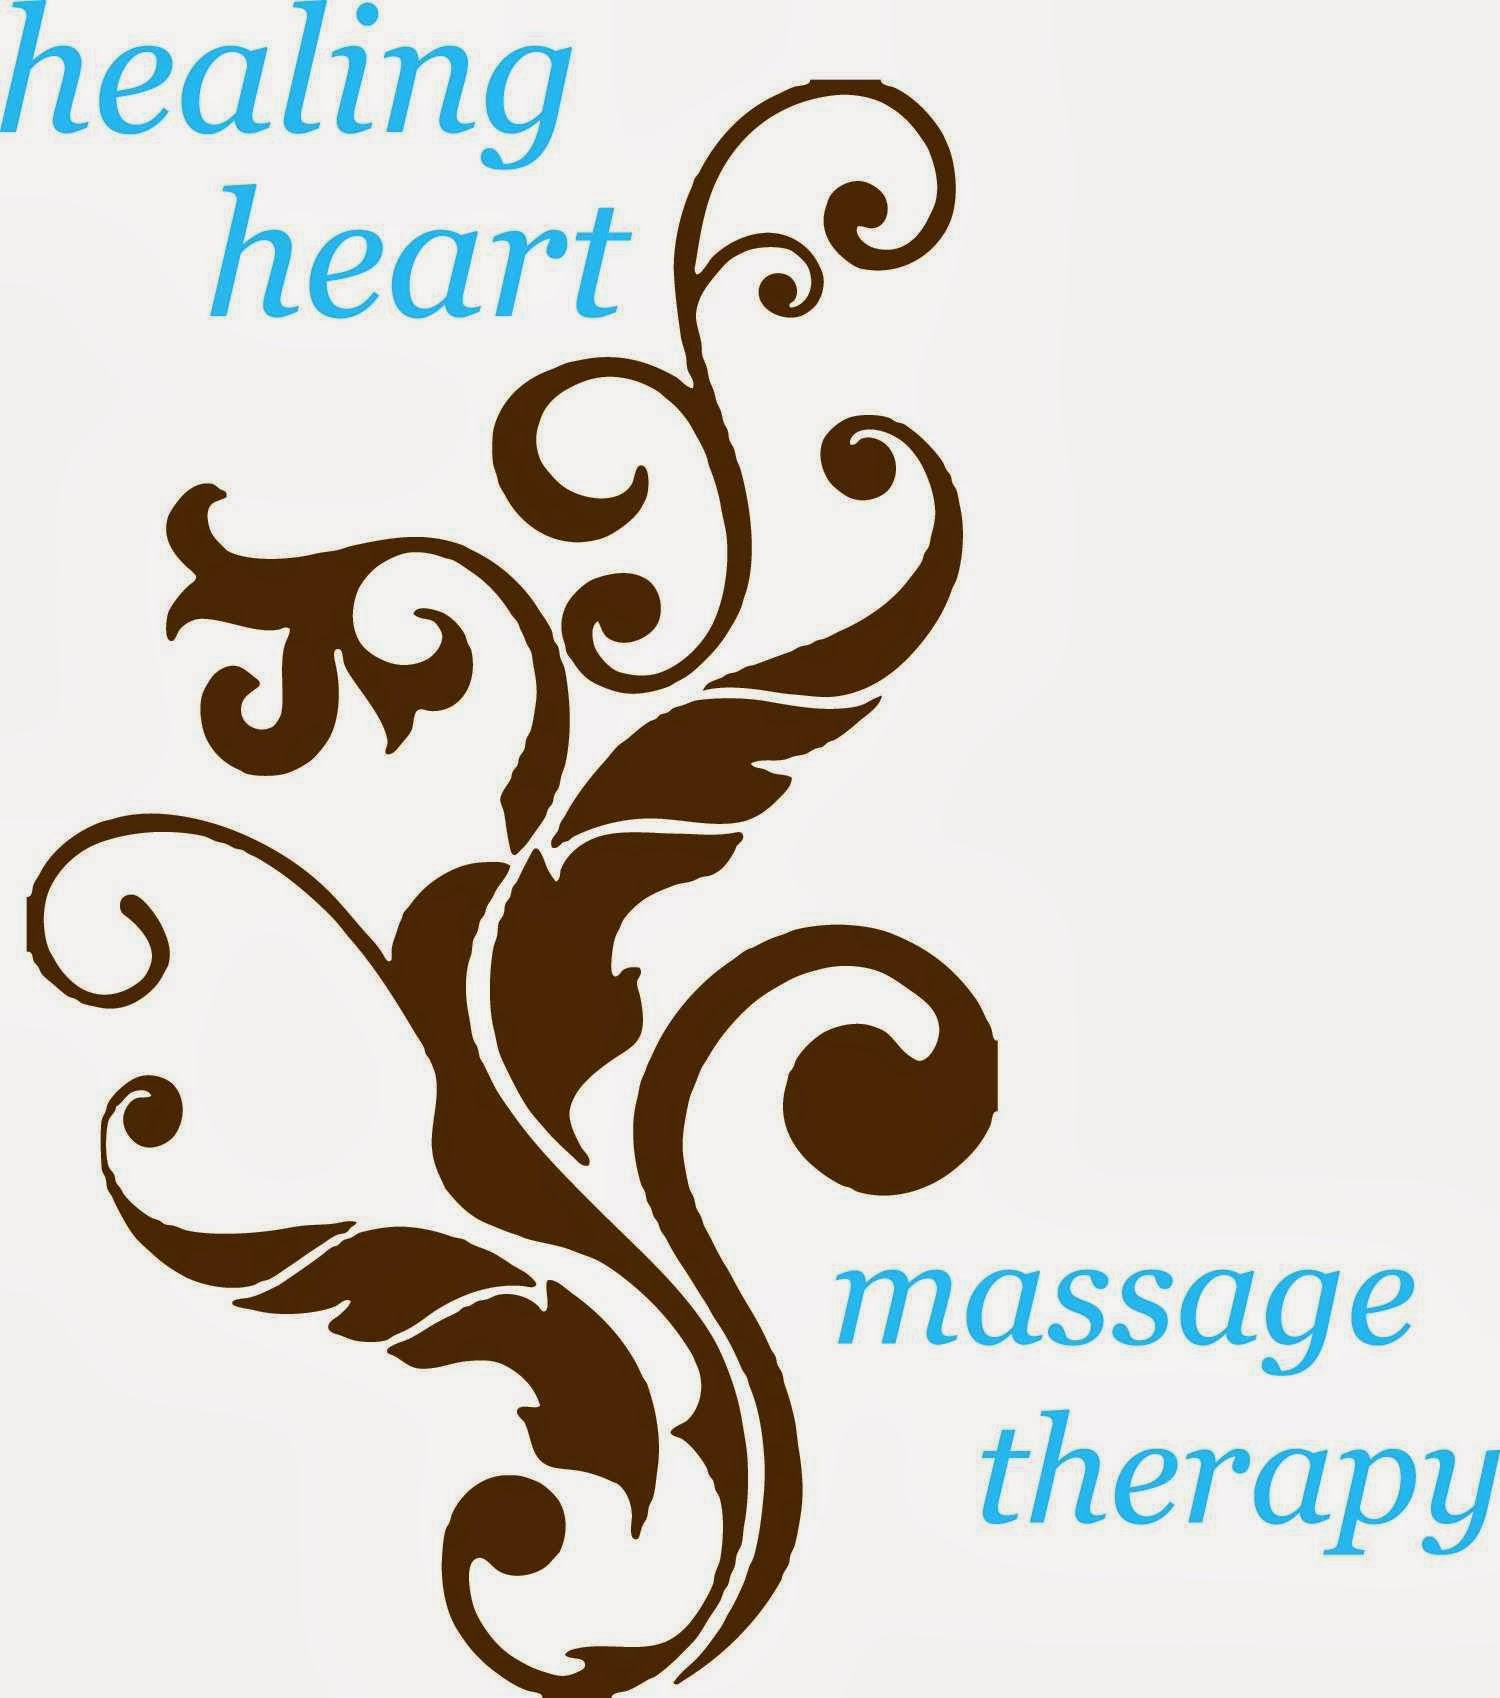 healing heart massage therapy